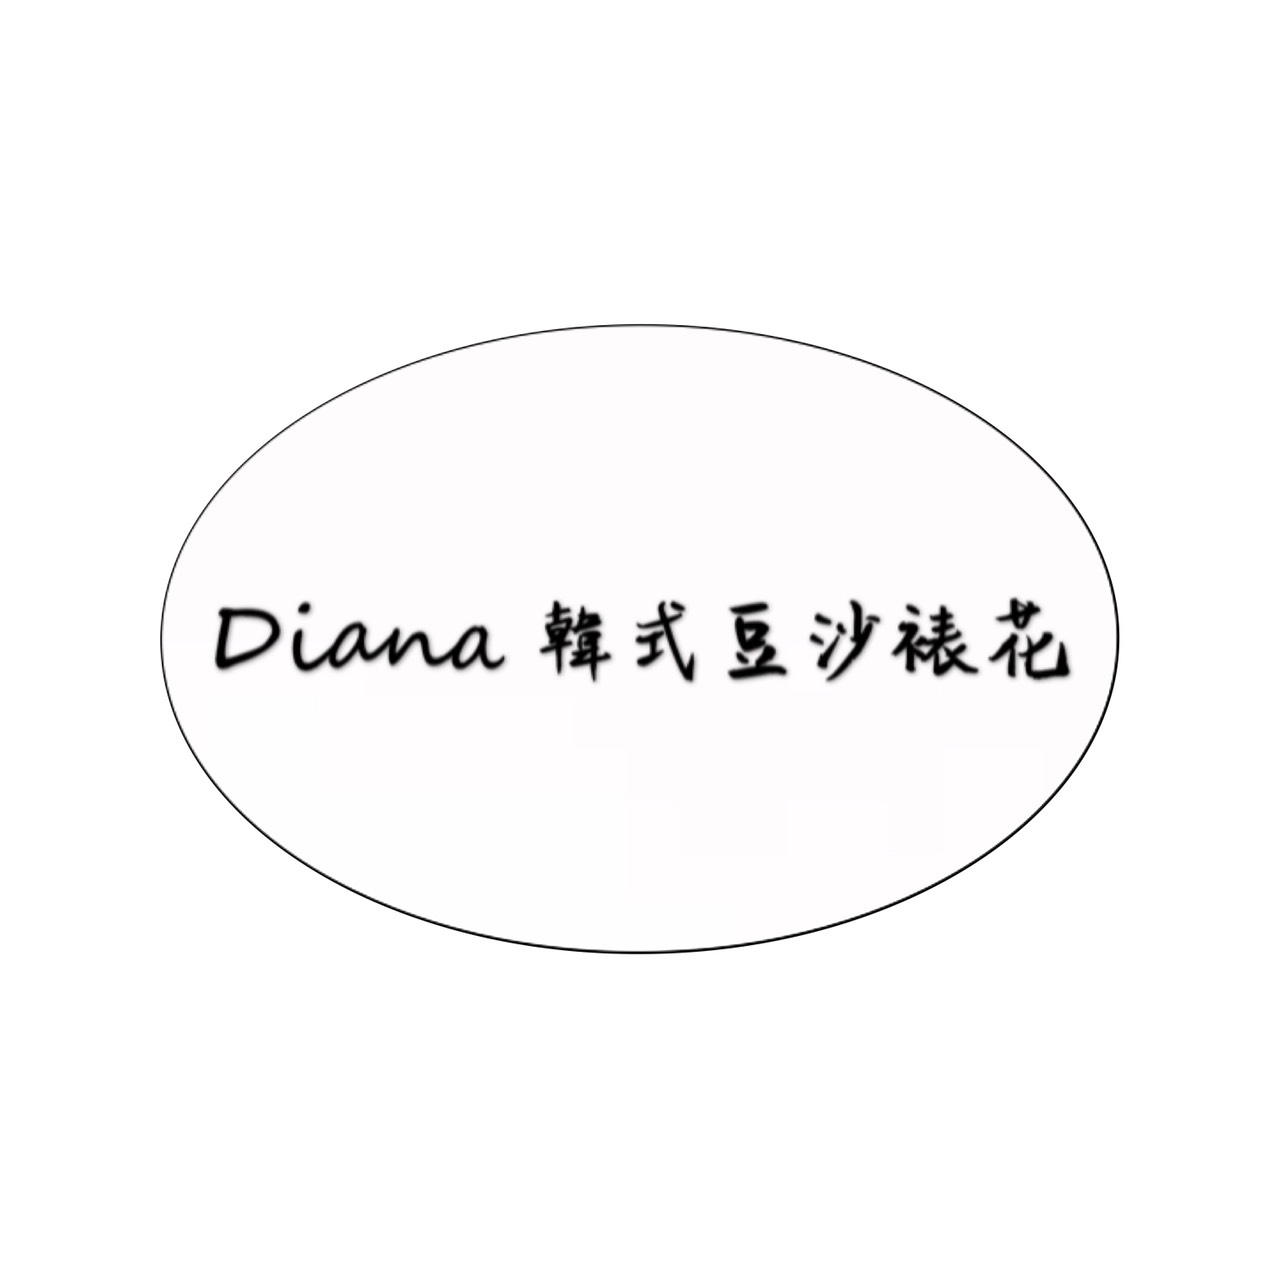 Diana韓式豆沙裱花